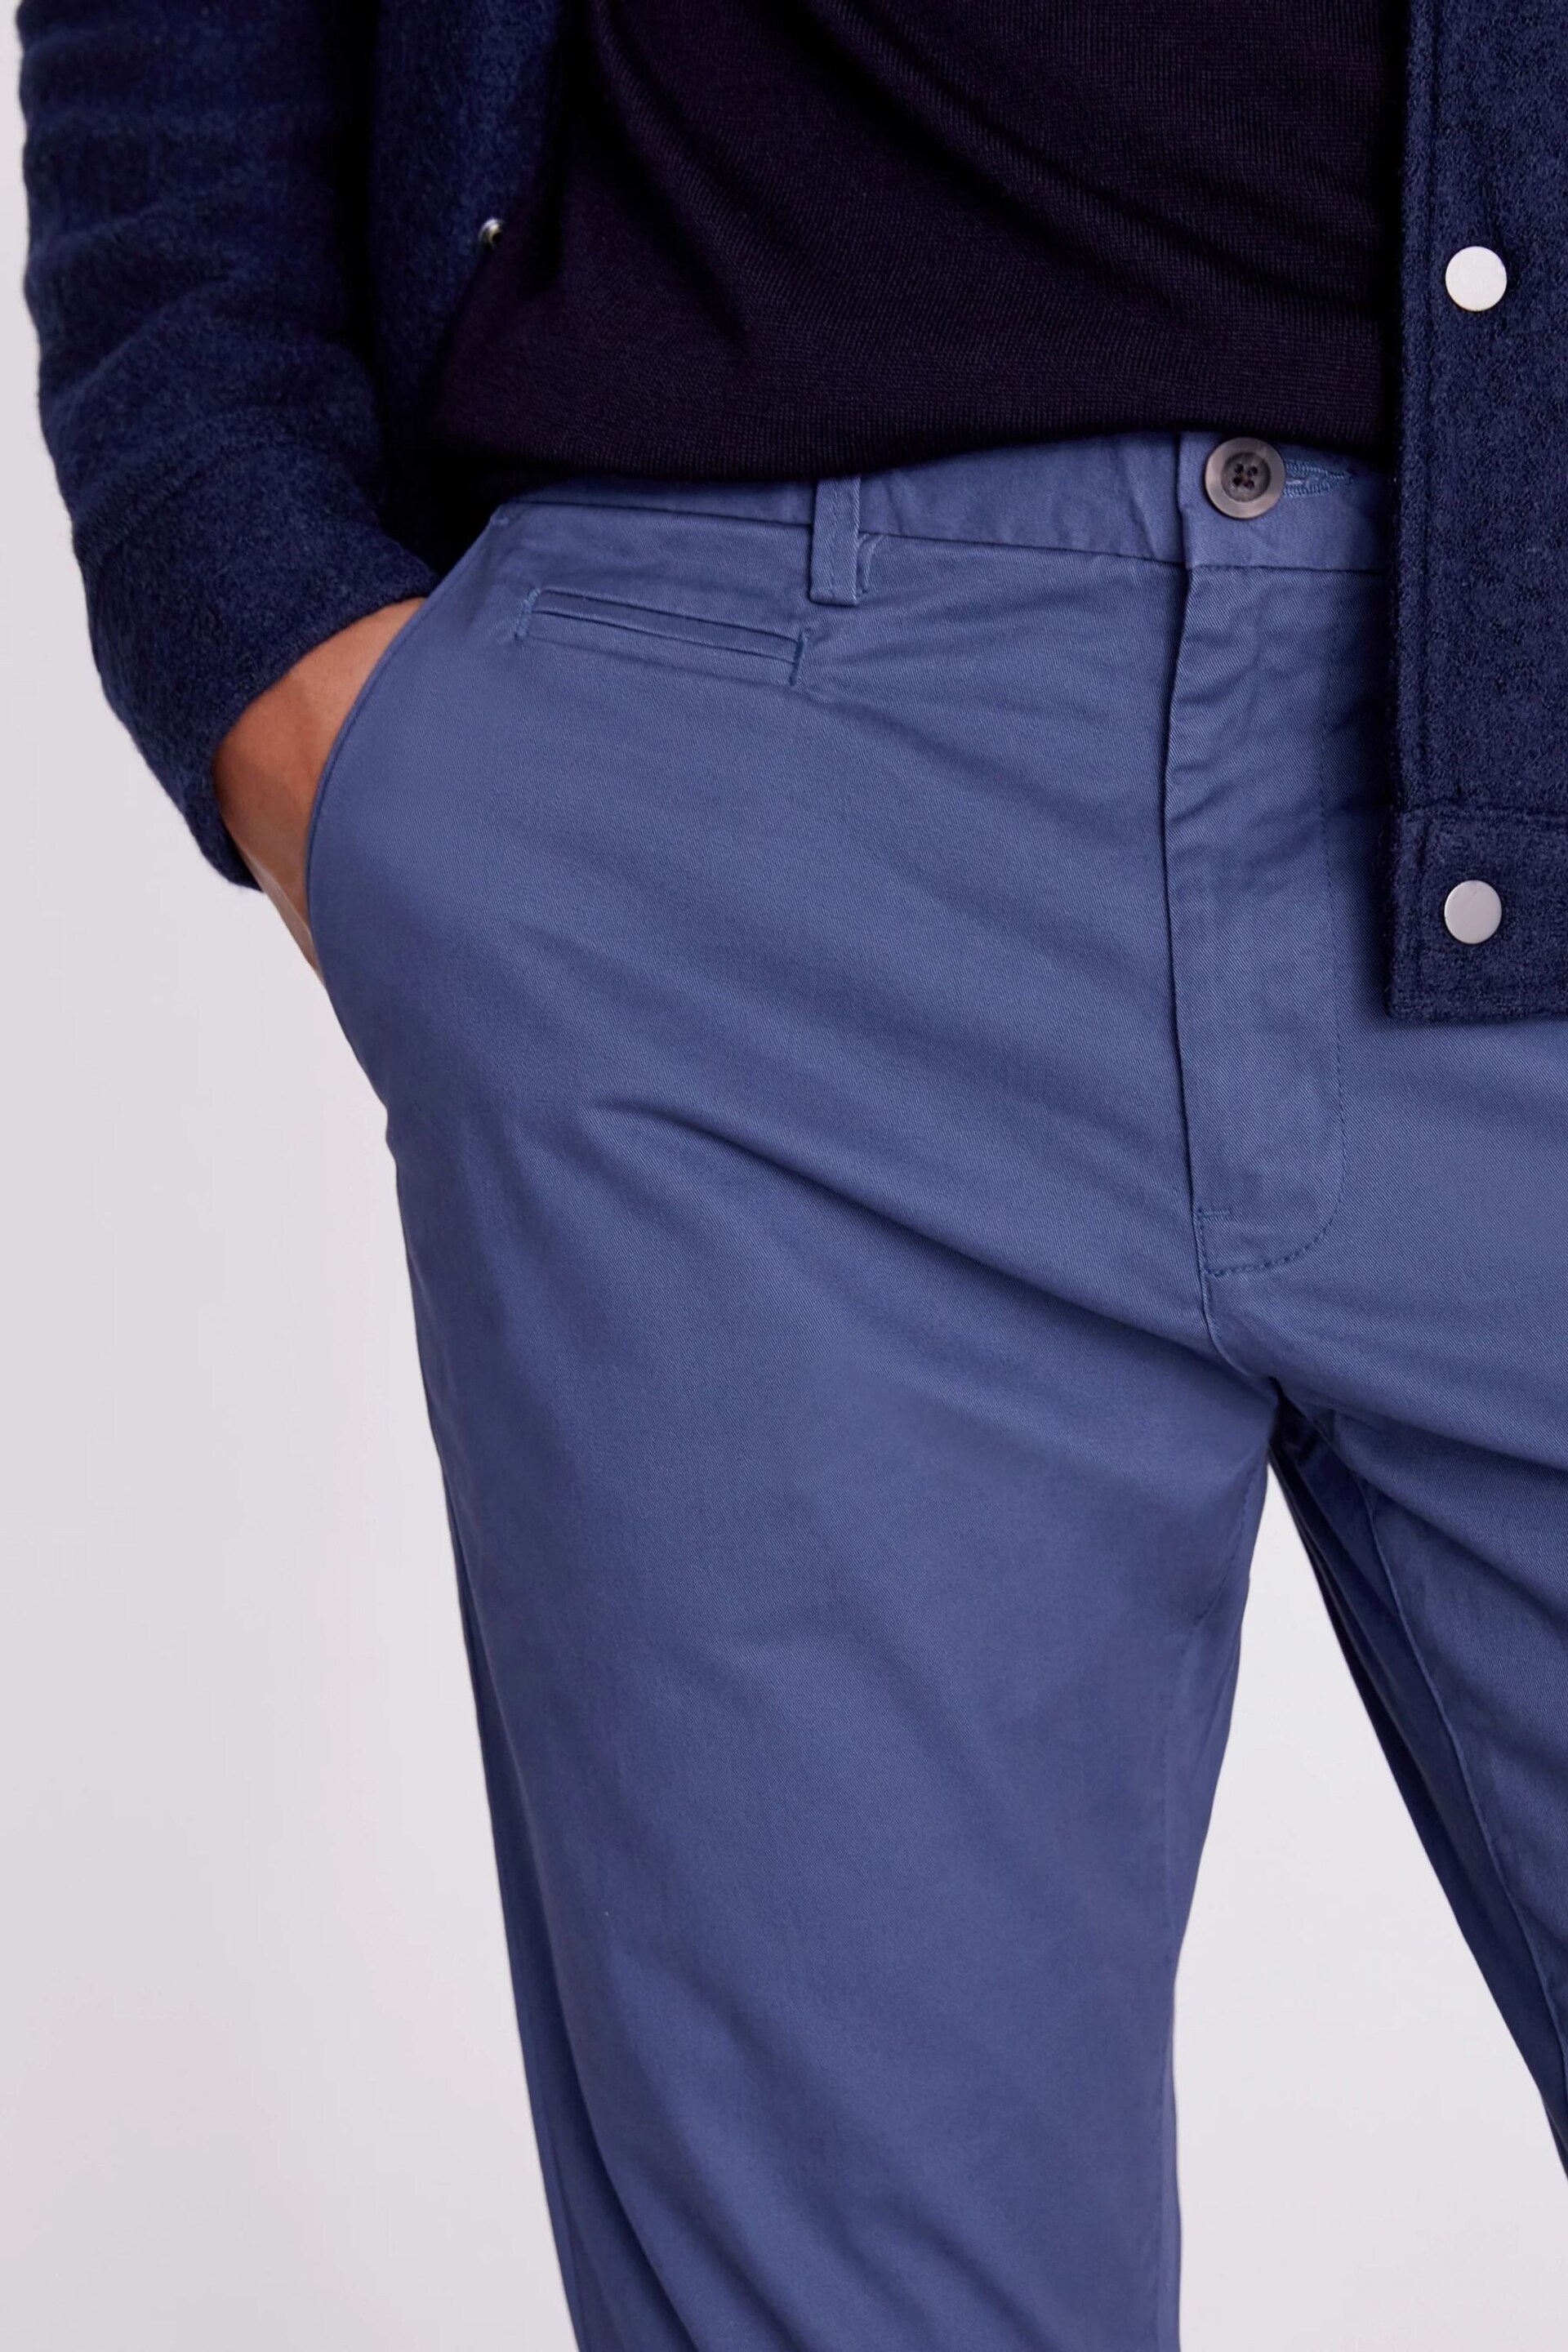 MOSS Dark Blue Tailored Chino Trousers - Image 3 of 4